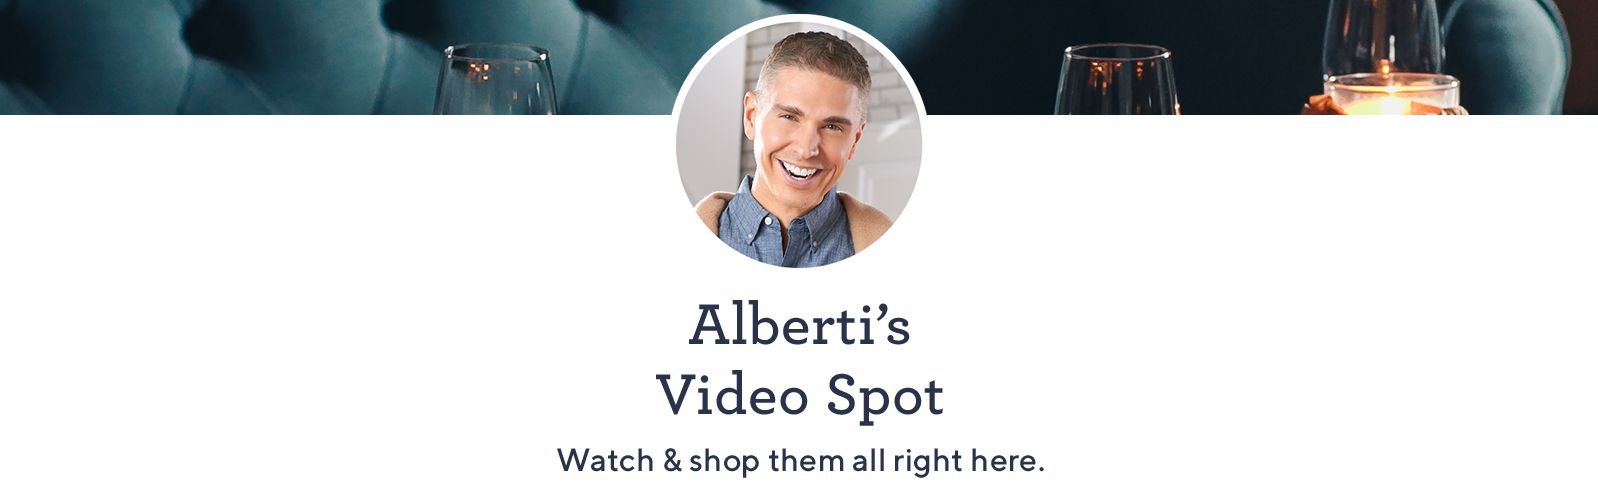 Albert's Video Spot. Watch & shop them all right here.